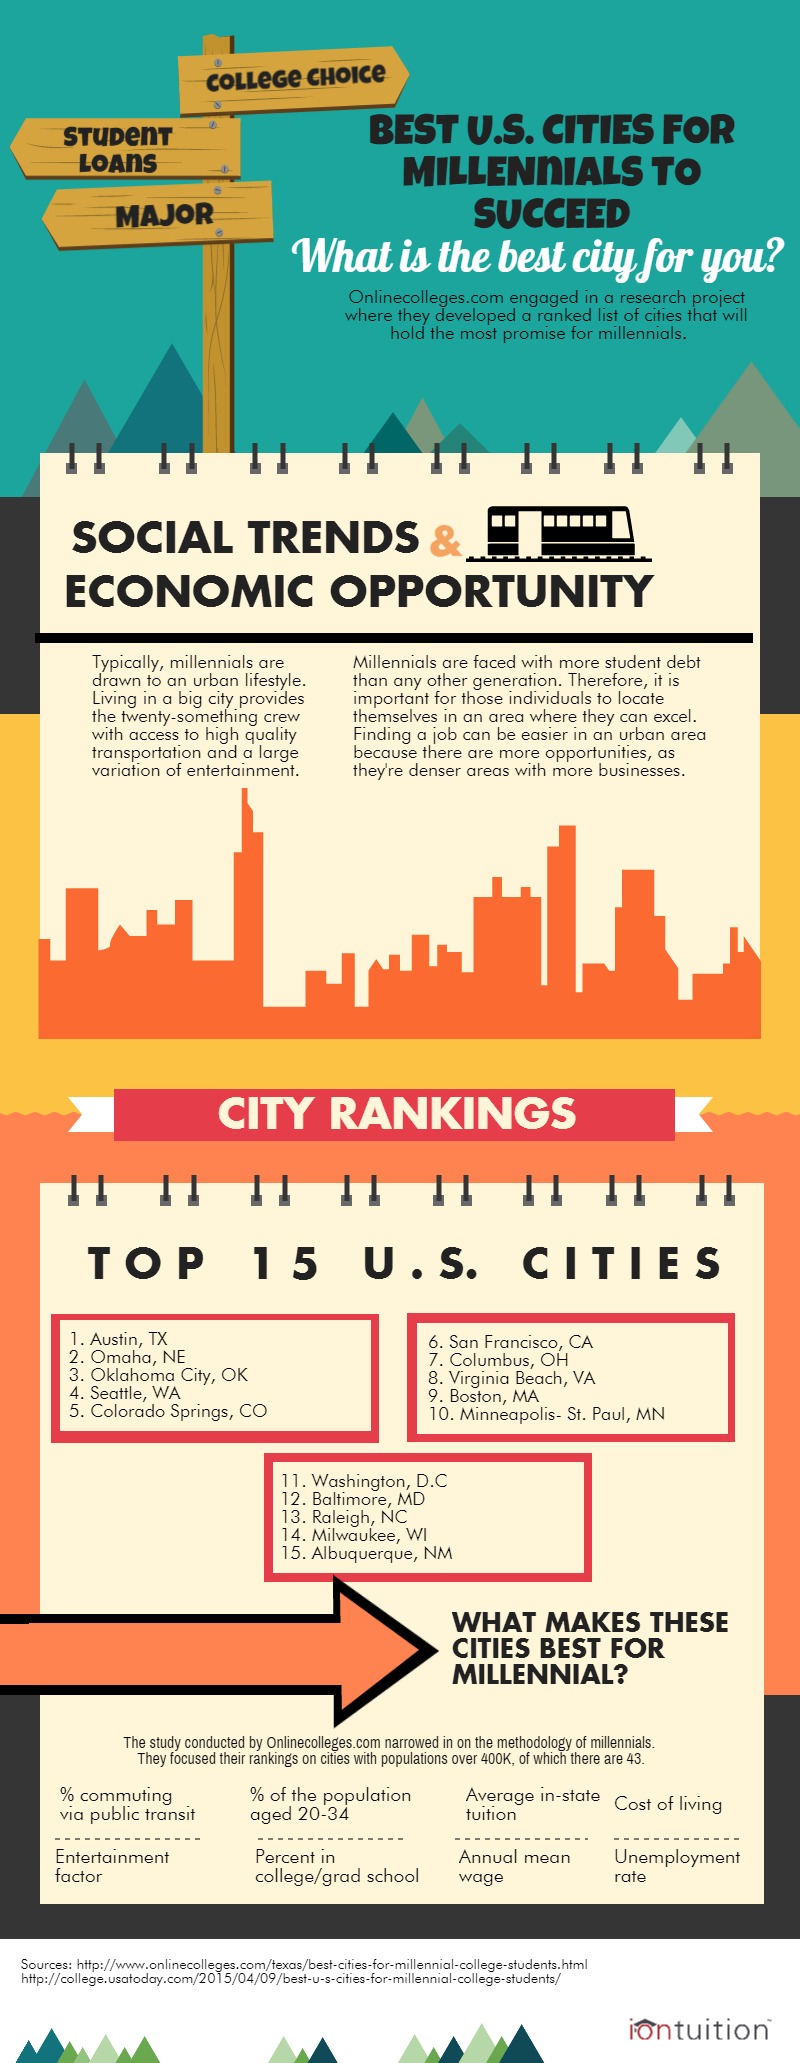 Best U.S. Cities for Millennials to Succeed